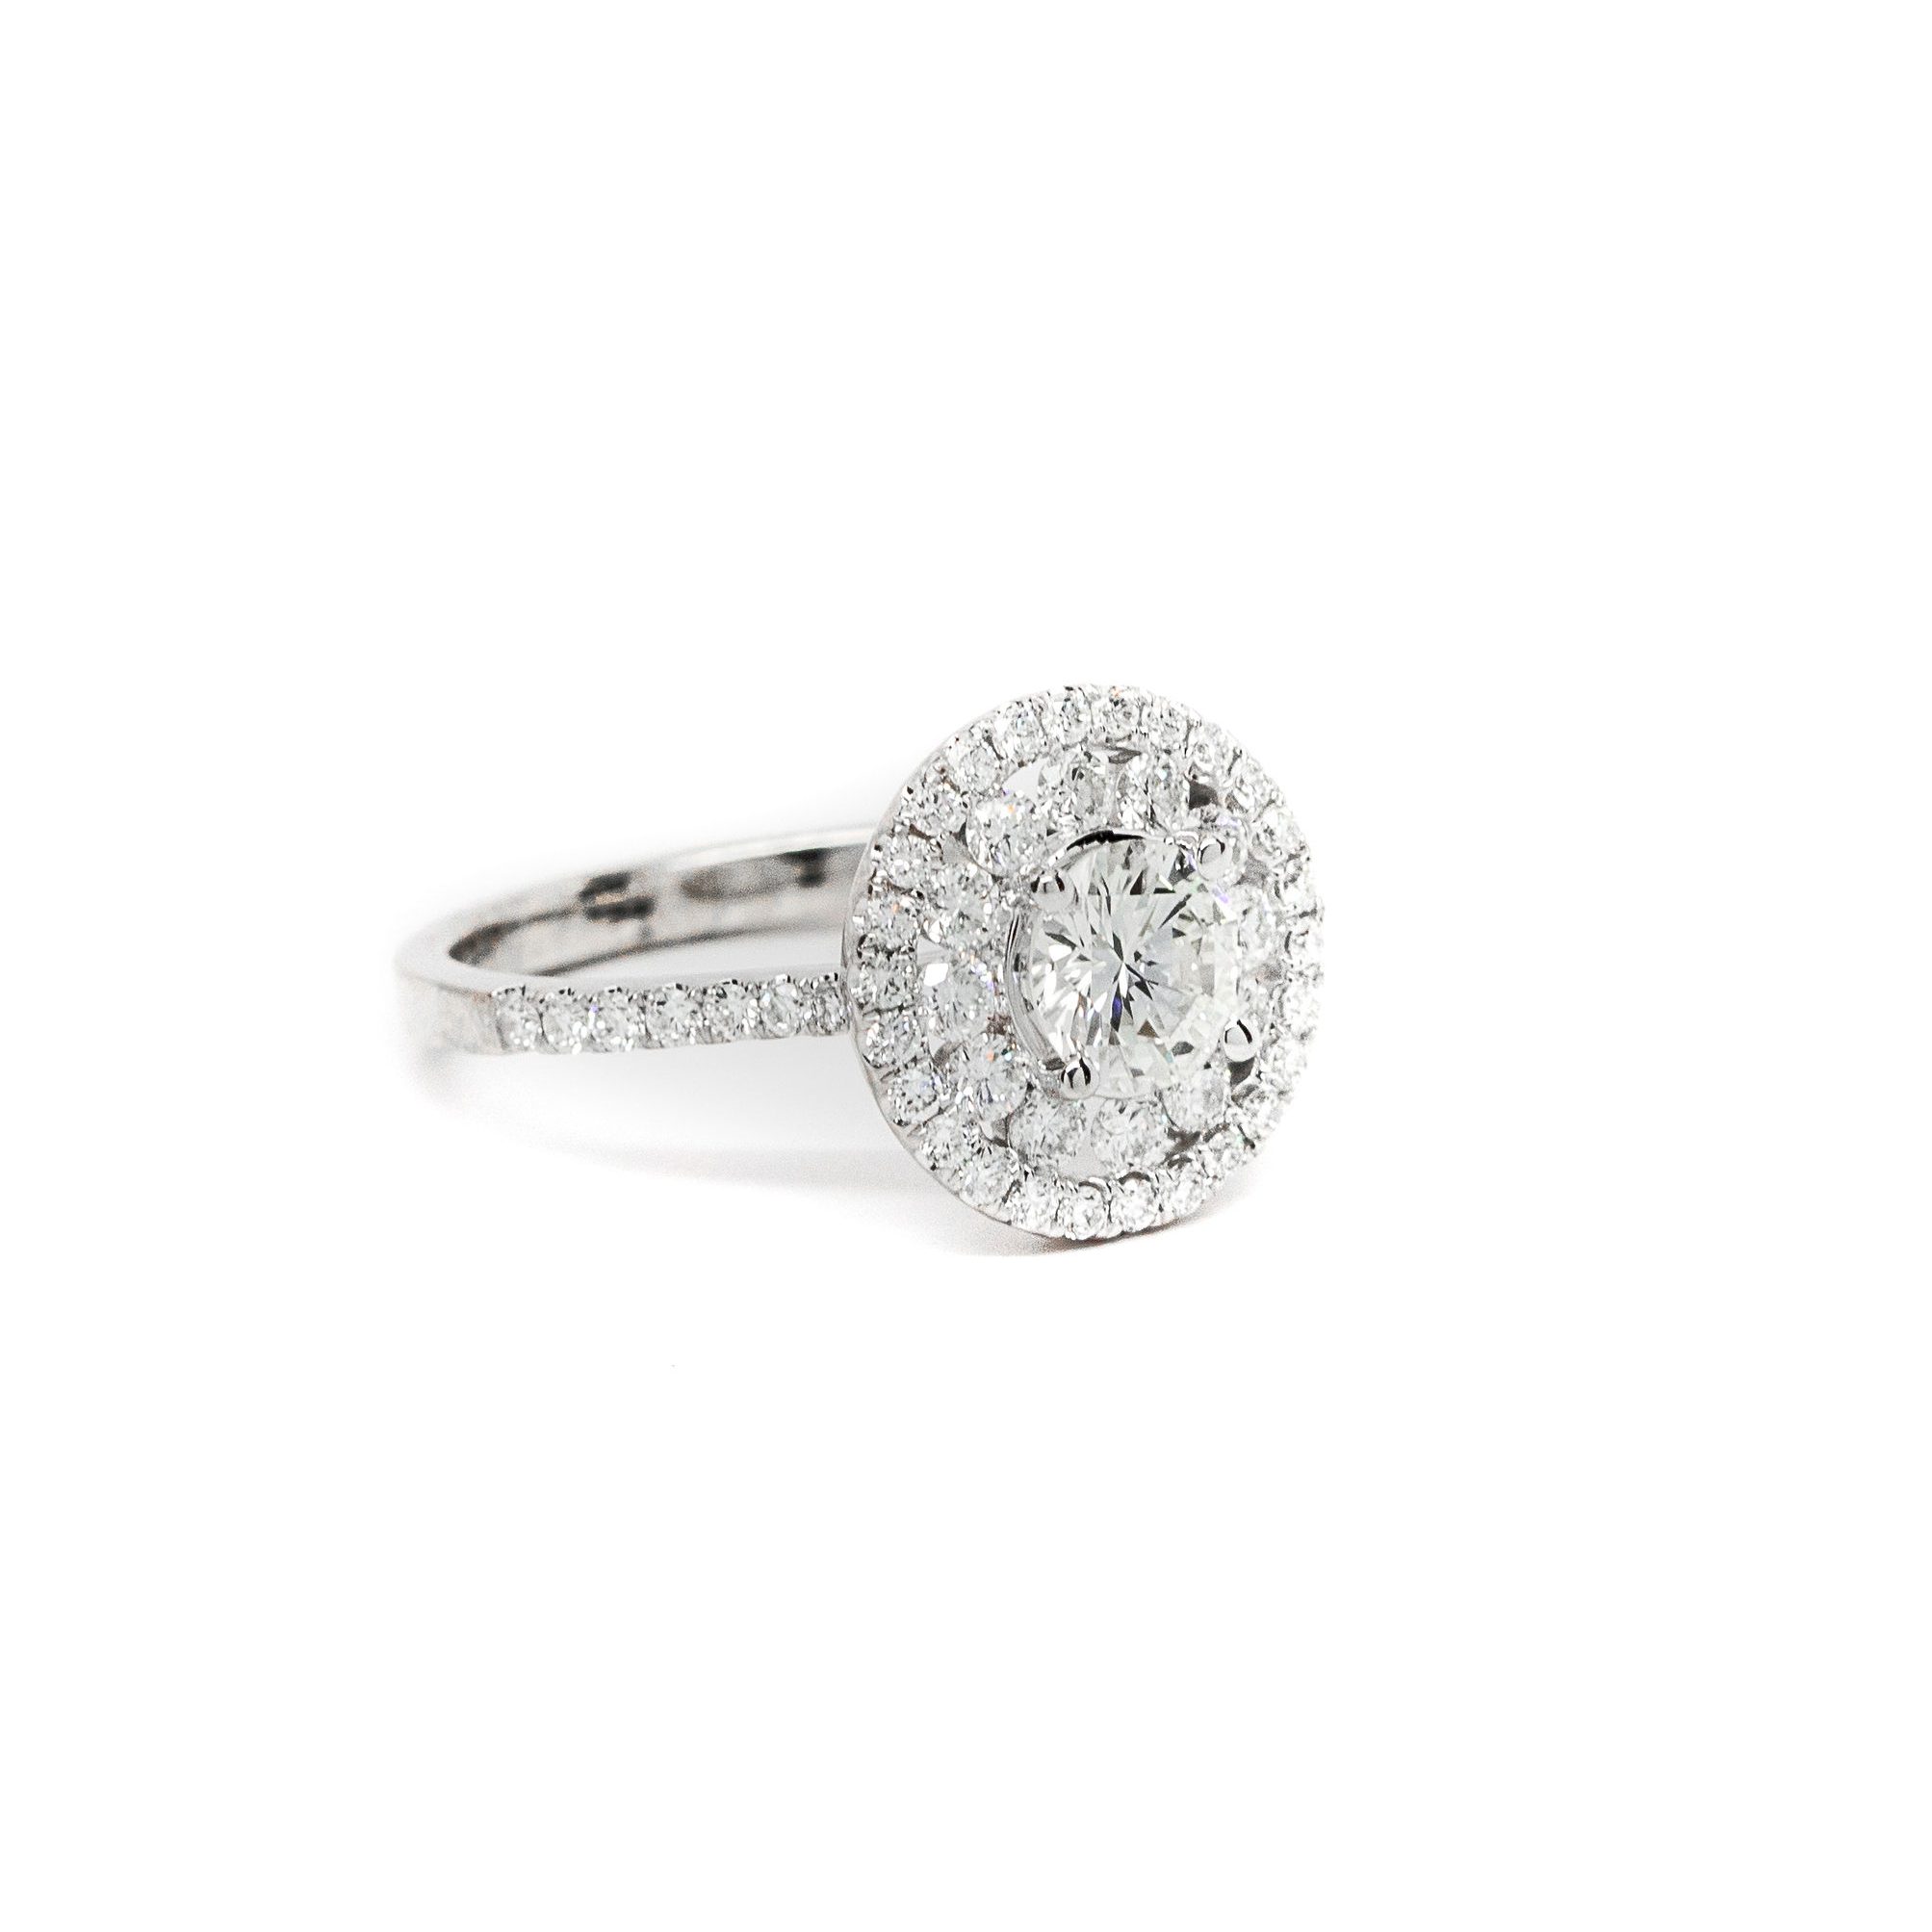 Miriams Jewelry Halo Engagement Ring - Miriams Jewelry